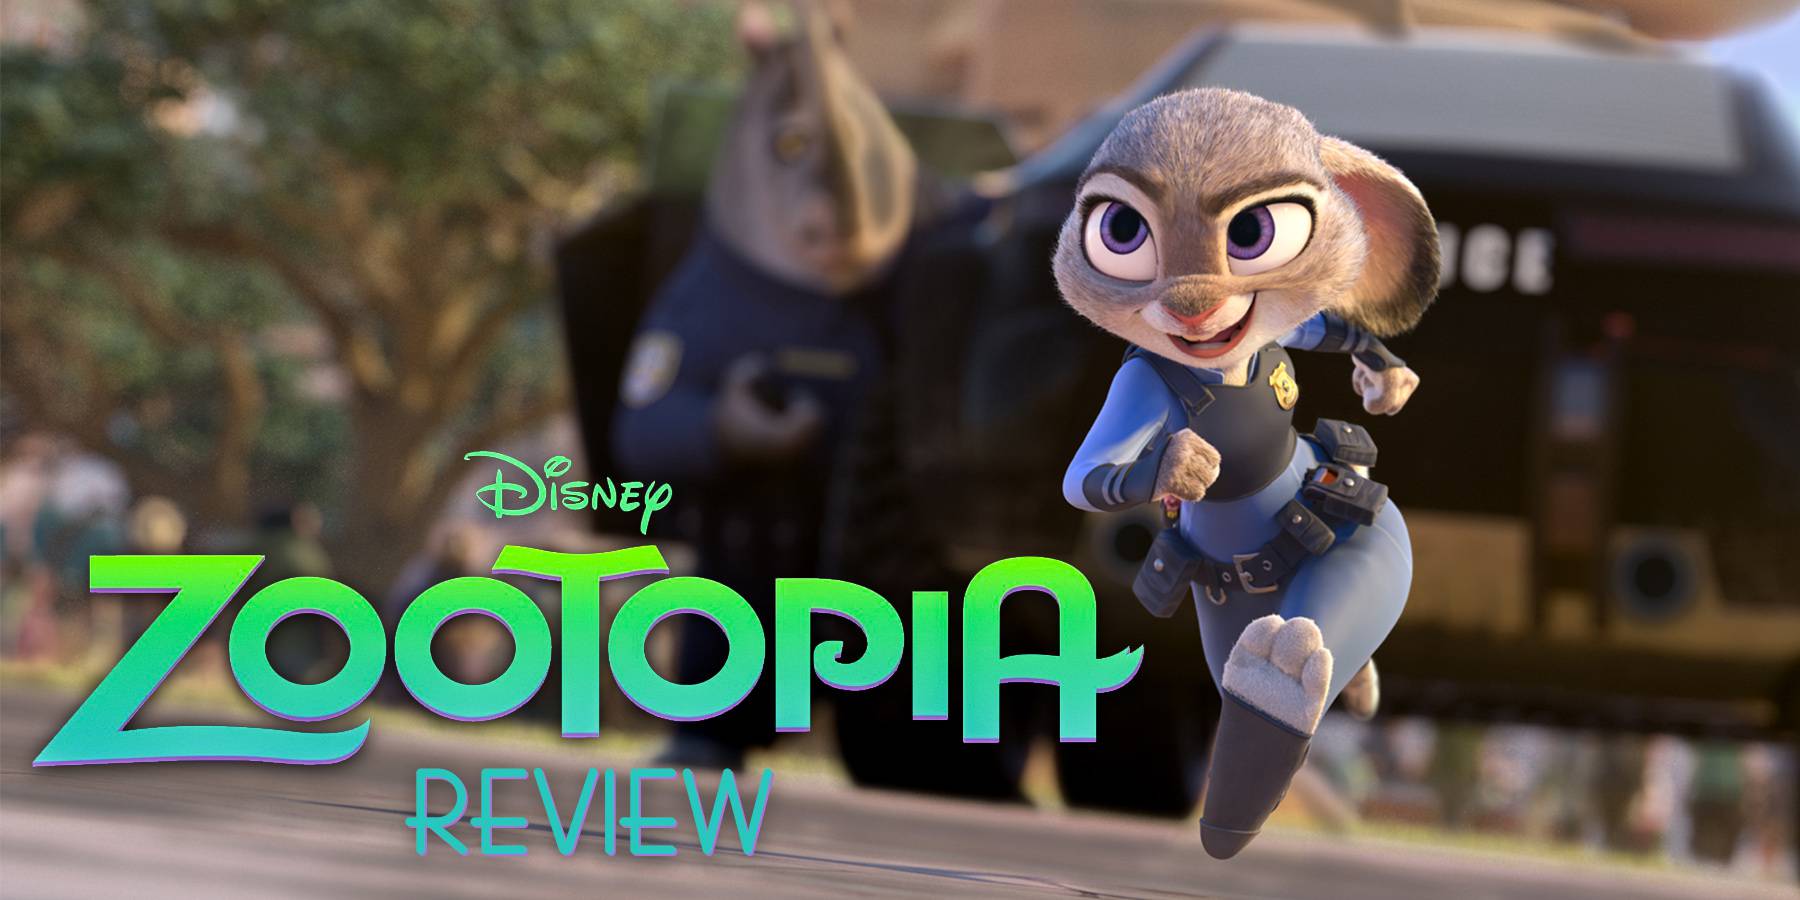 Movie Trailer: Zootopia (2016)